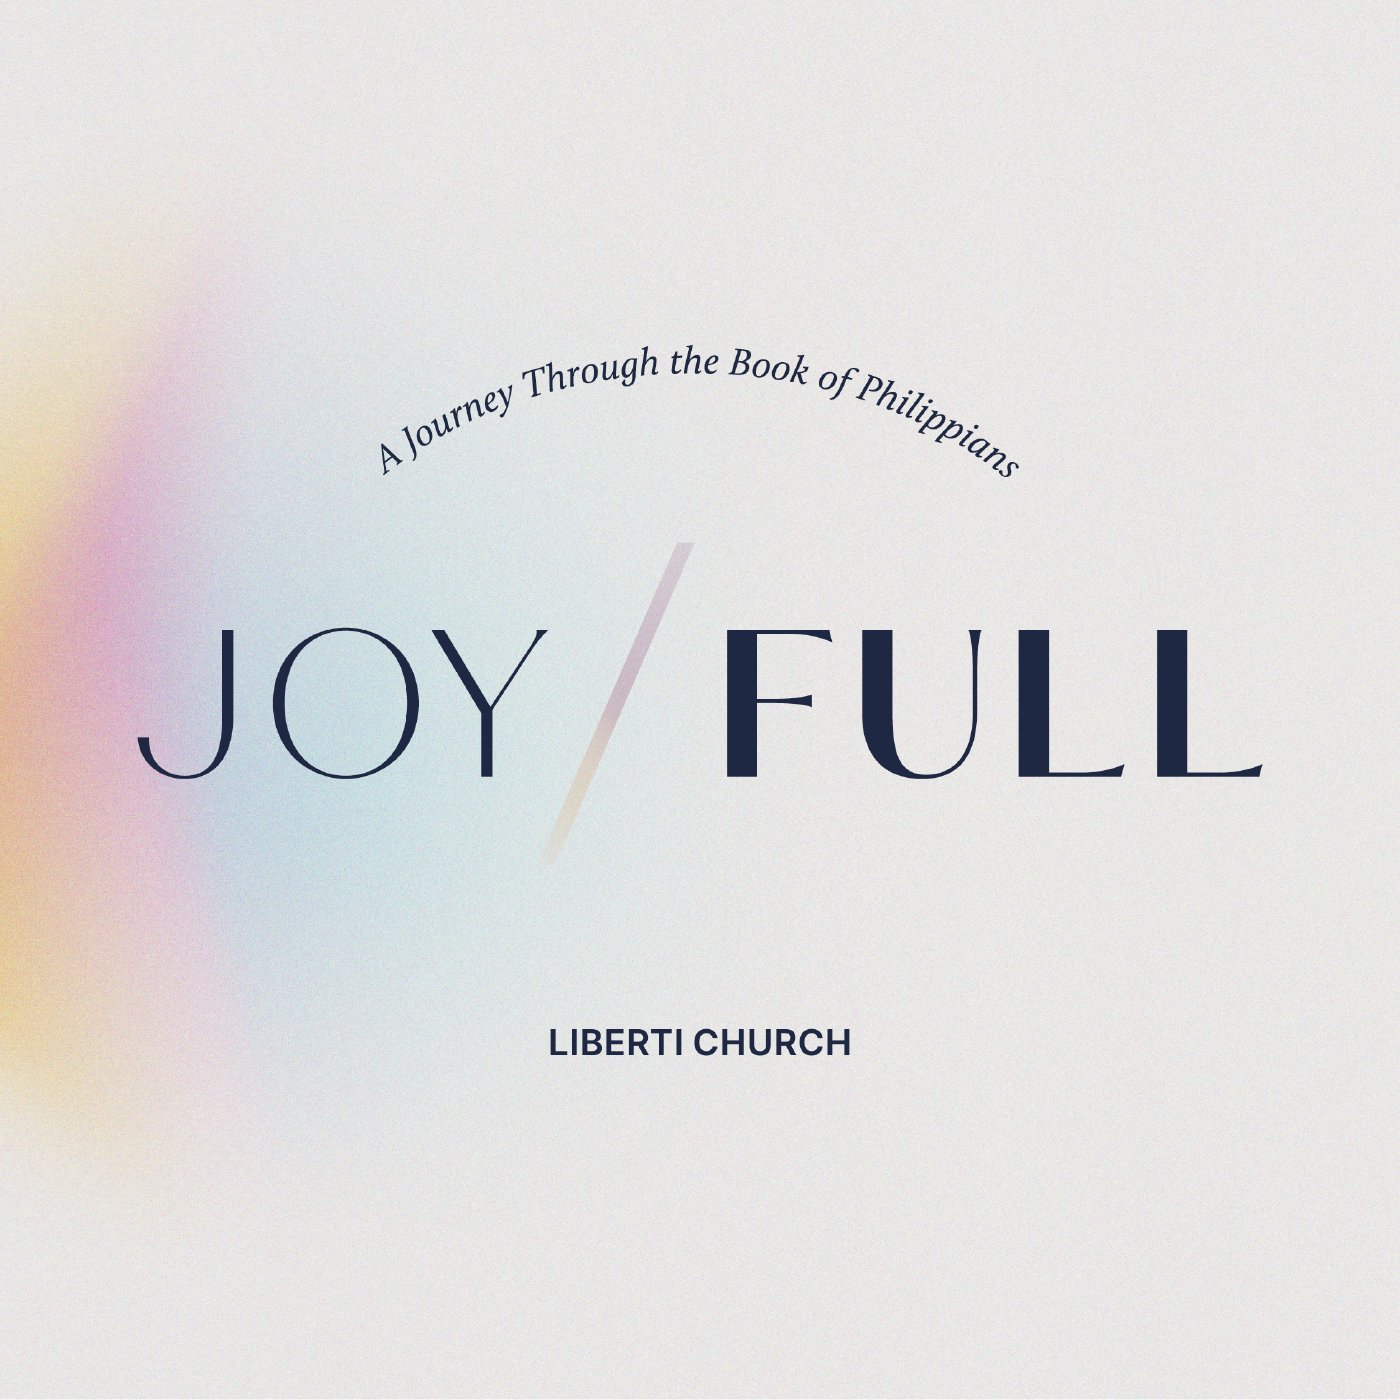 Joy/Full - Onward We Stumble - Week 8